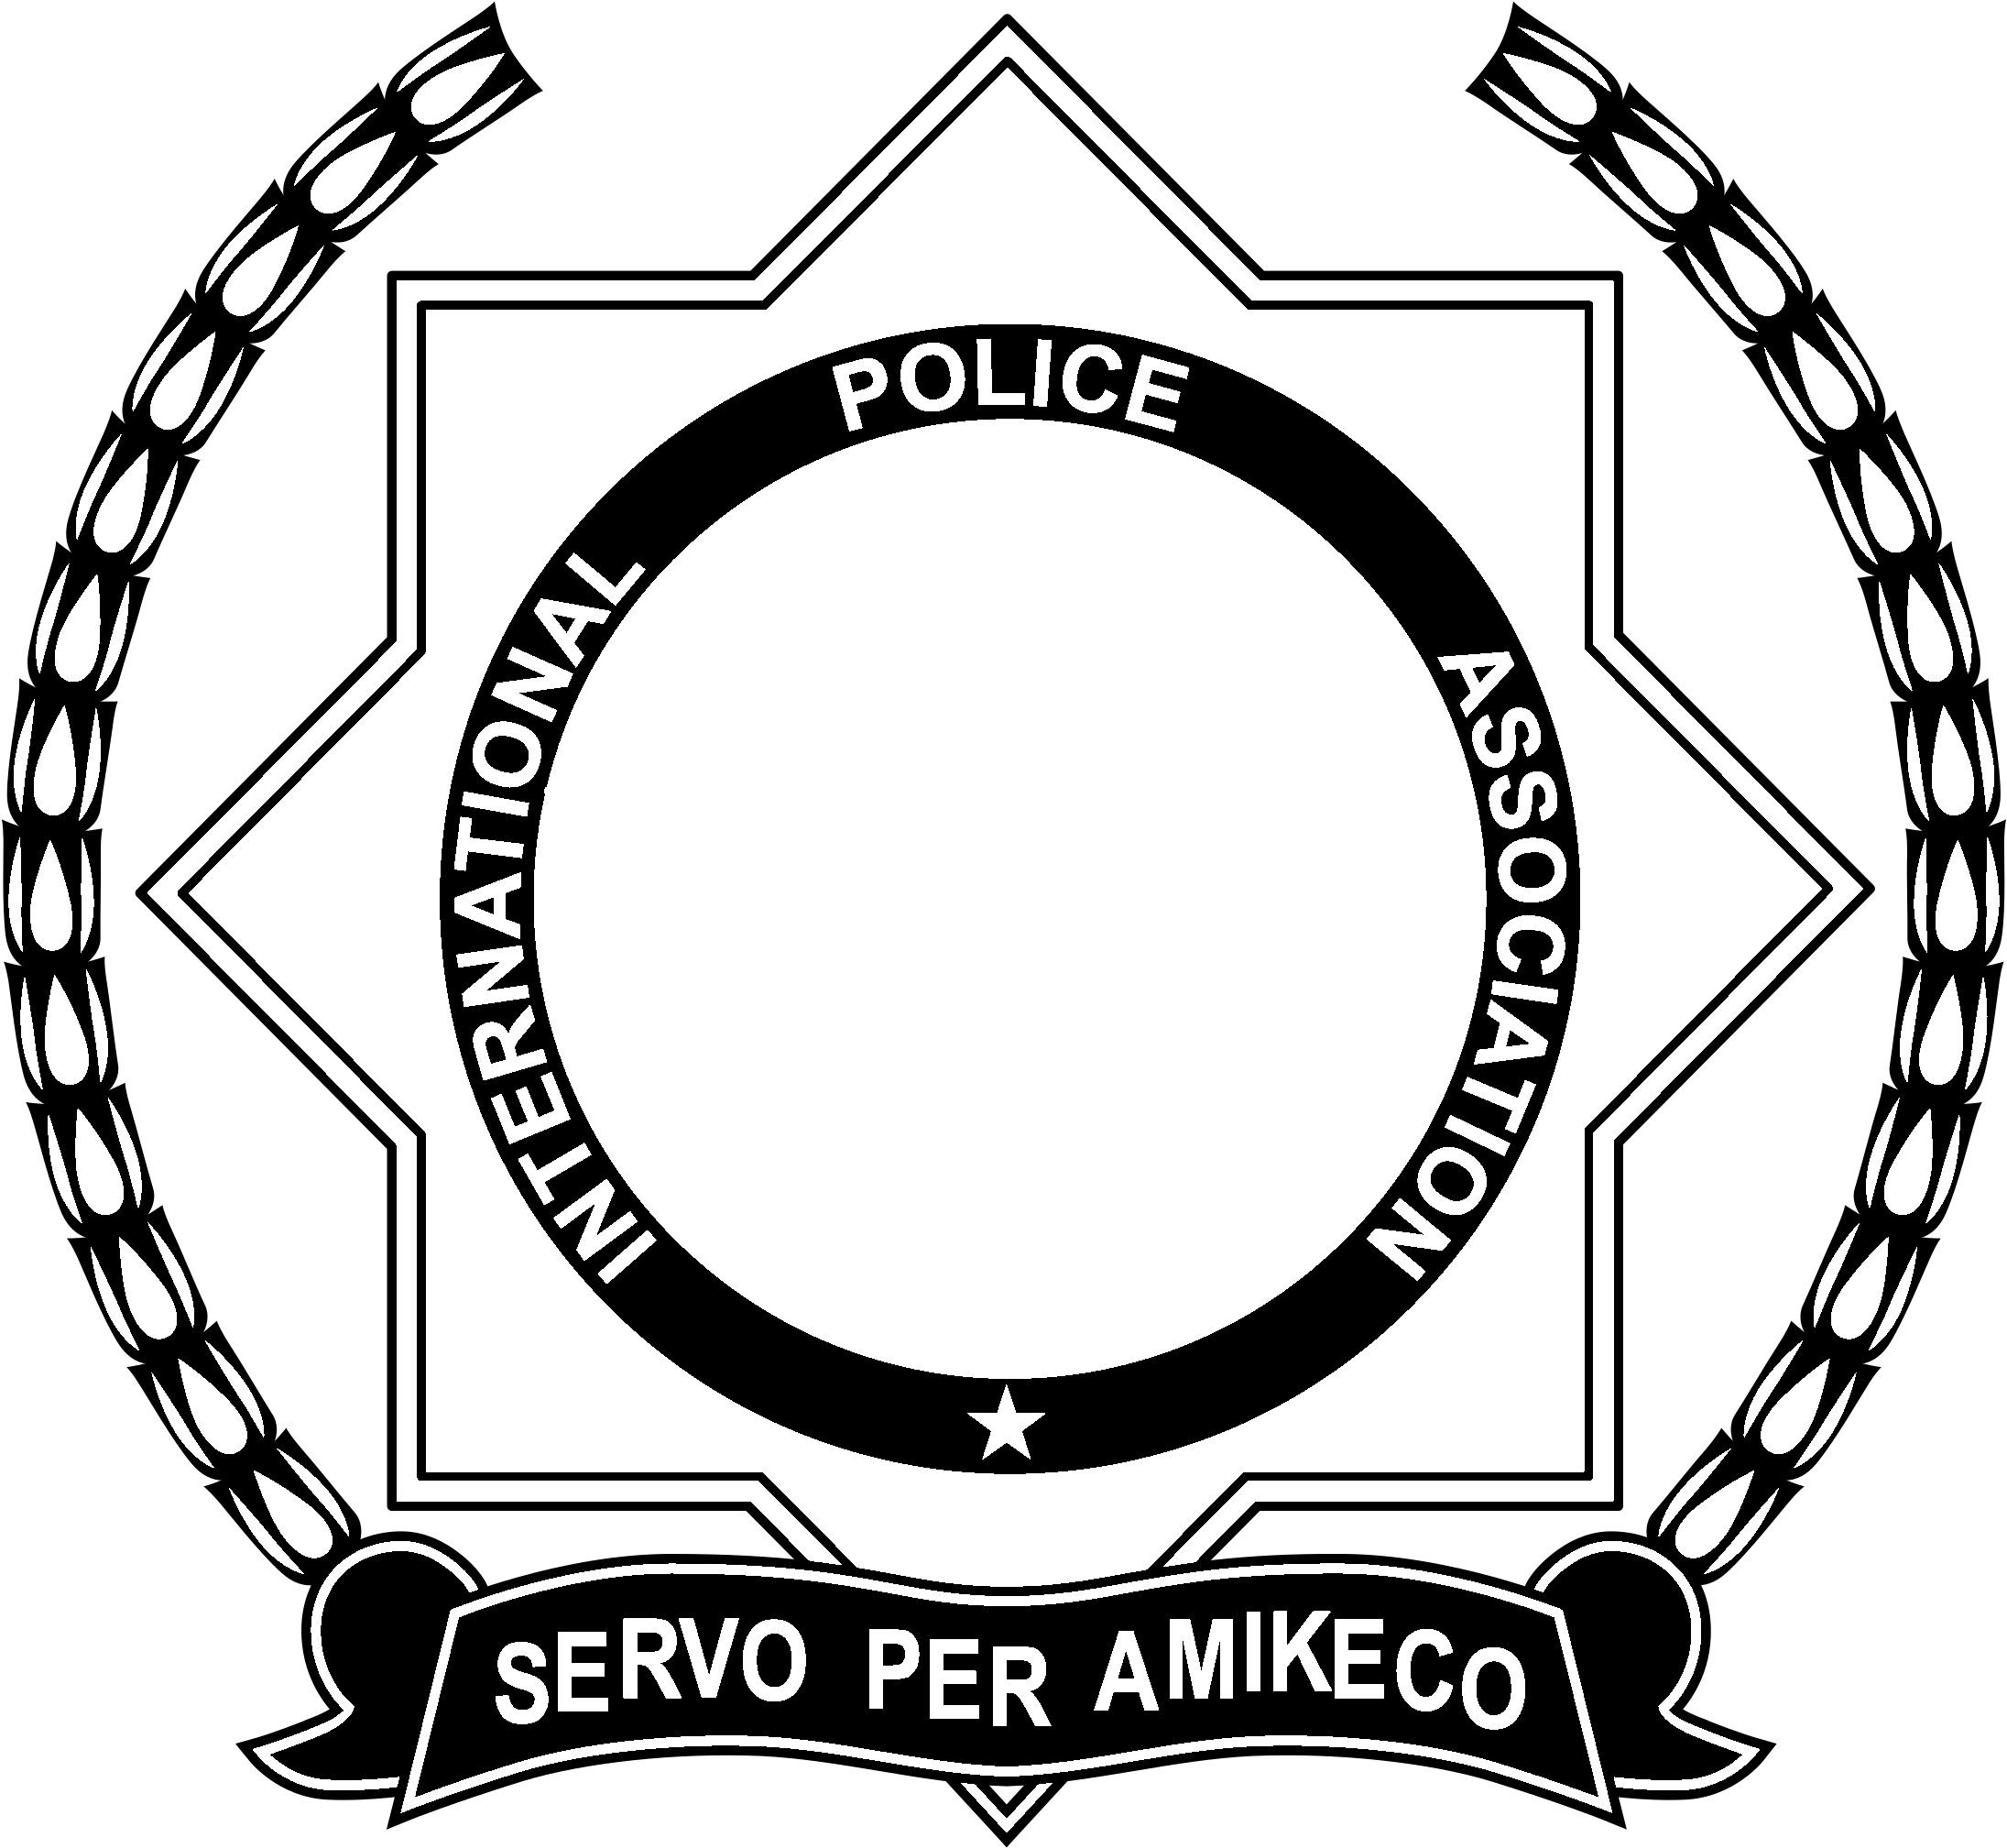 International Police Assosiation Logo Black And White - 2018 South Florida Fair (2400x2400)